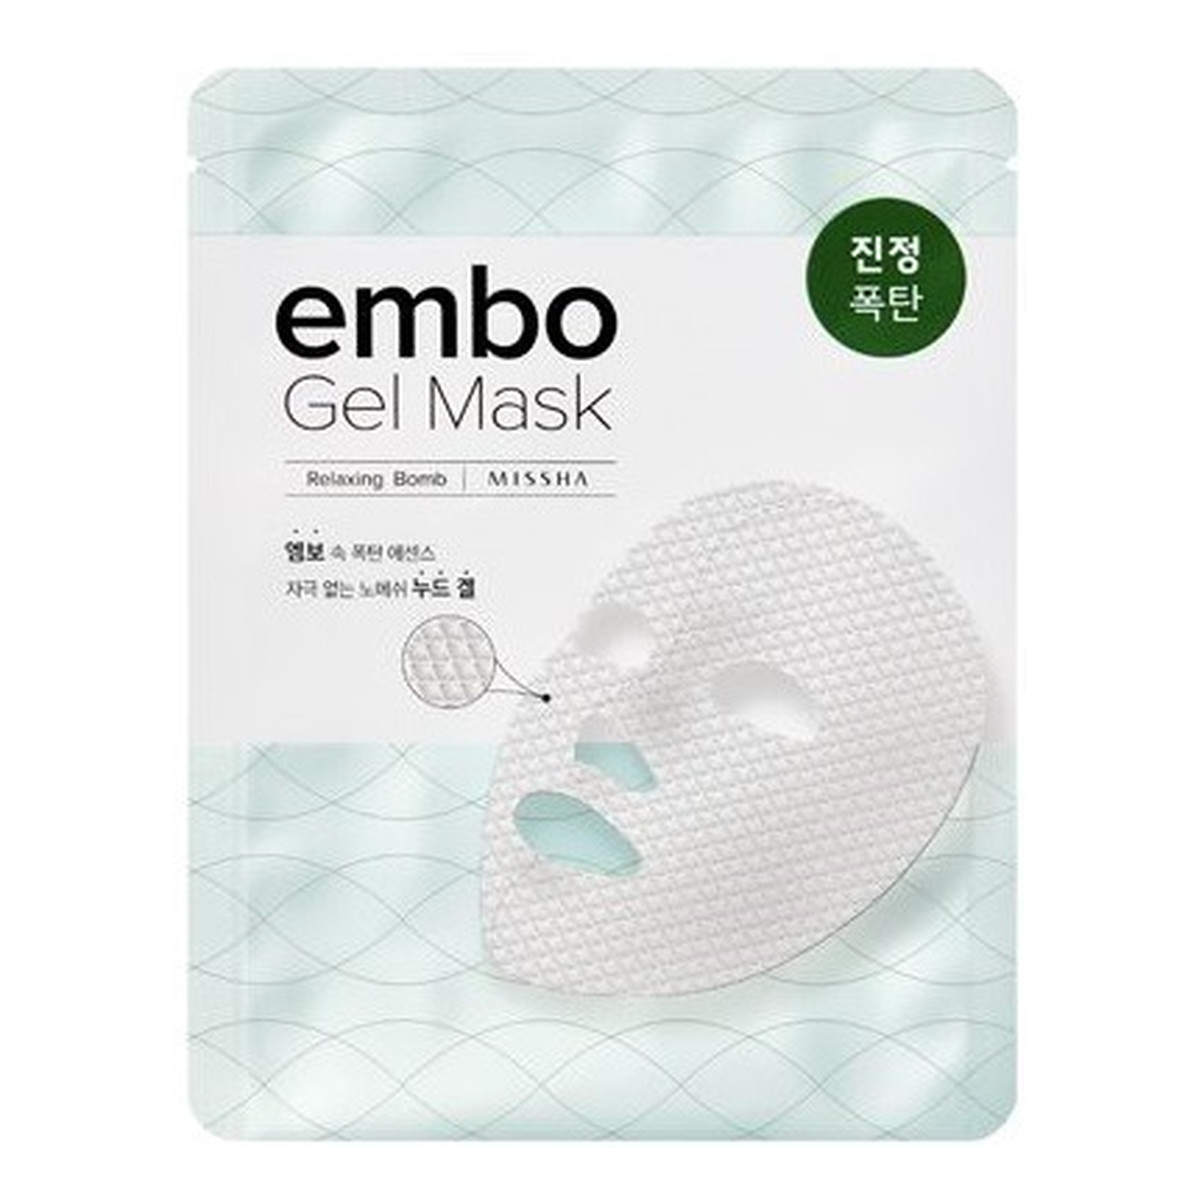 Missha Embo Gel Mask Relaxing Bomb Maska Do Twarzy Relaksacyjna 1szt.